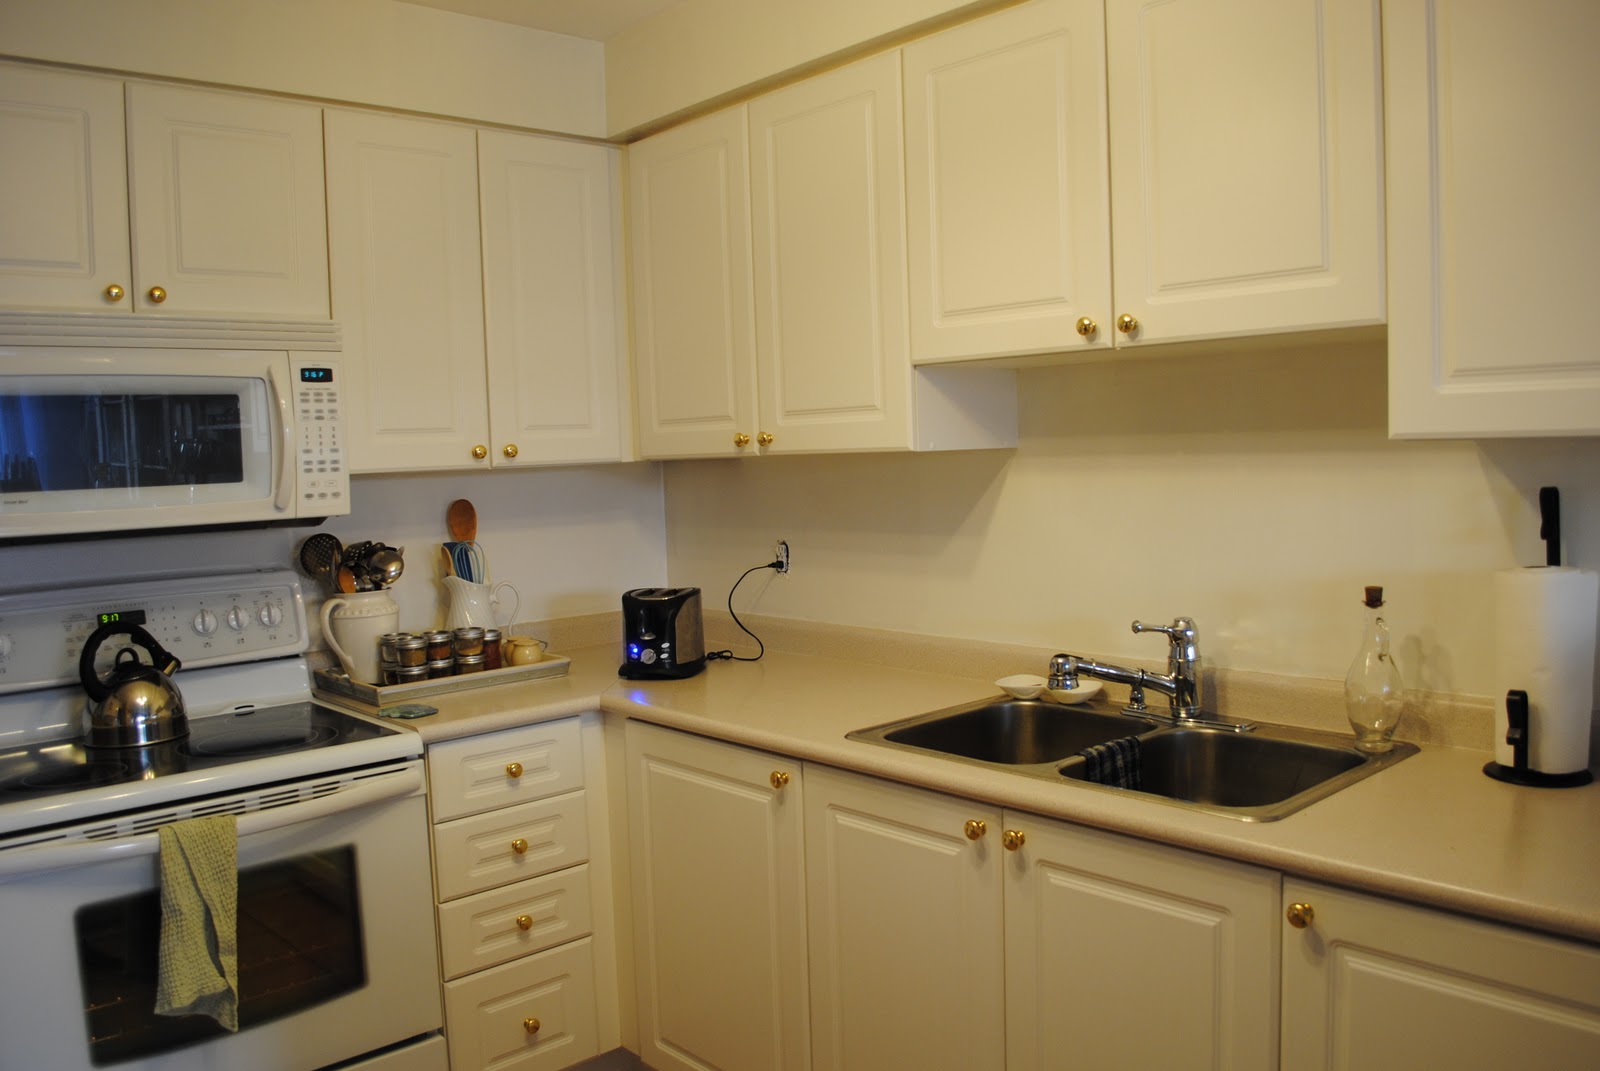 Kitchens With White Appliances